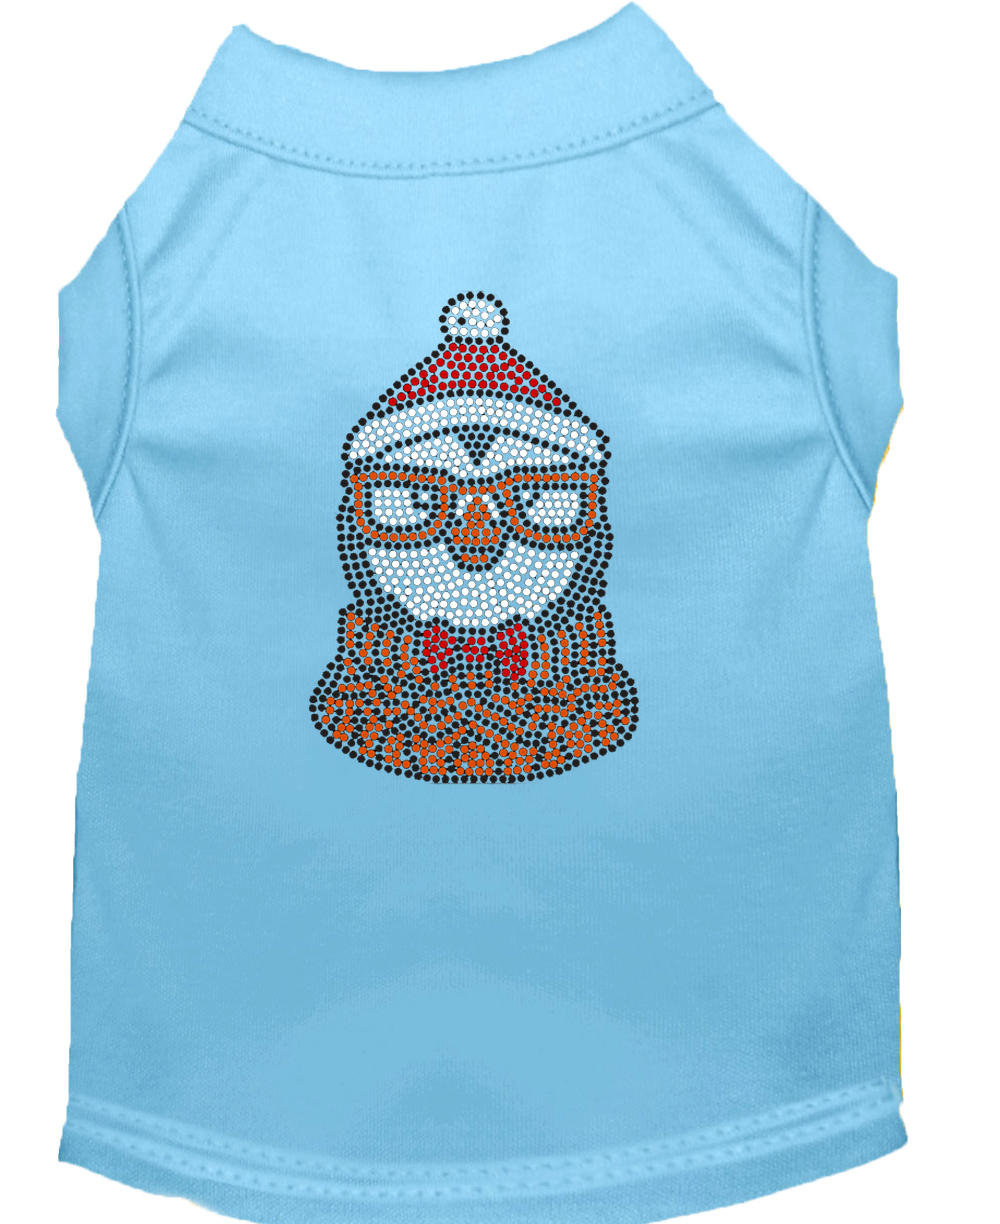 Hipster Penguin Rhinestone Dog Shirt Baby Blue XXXL